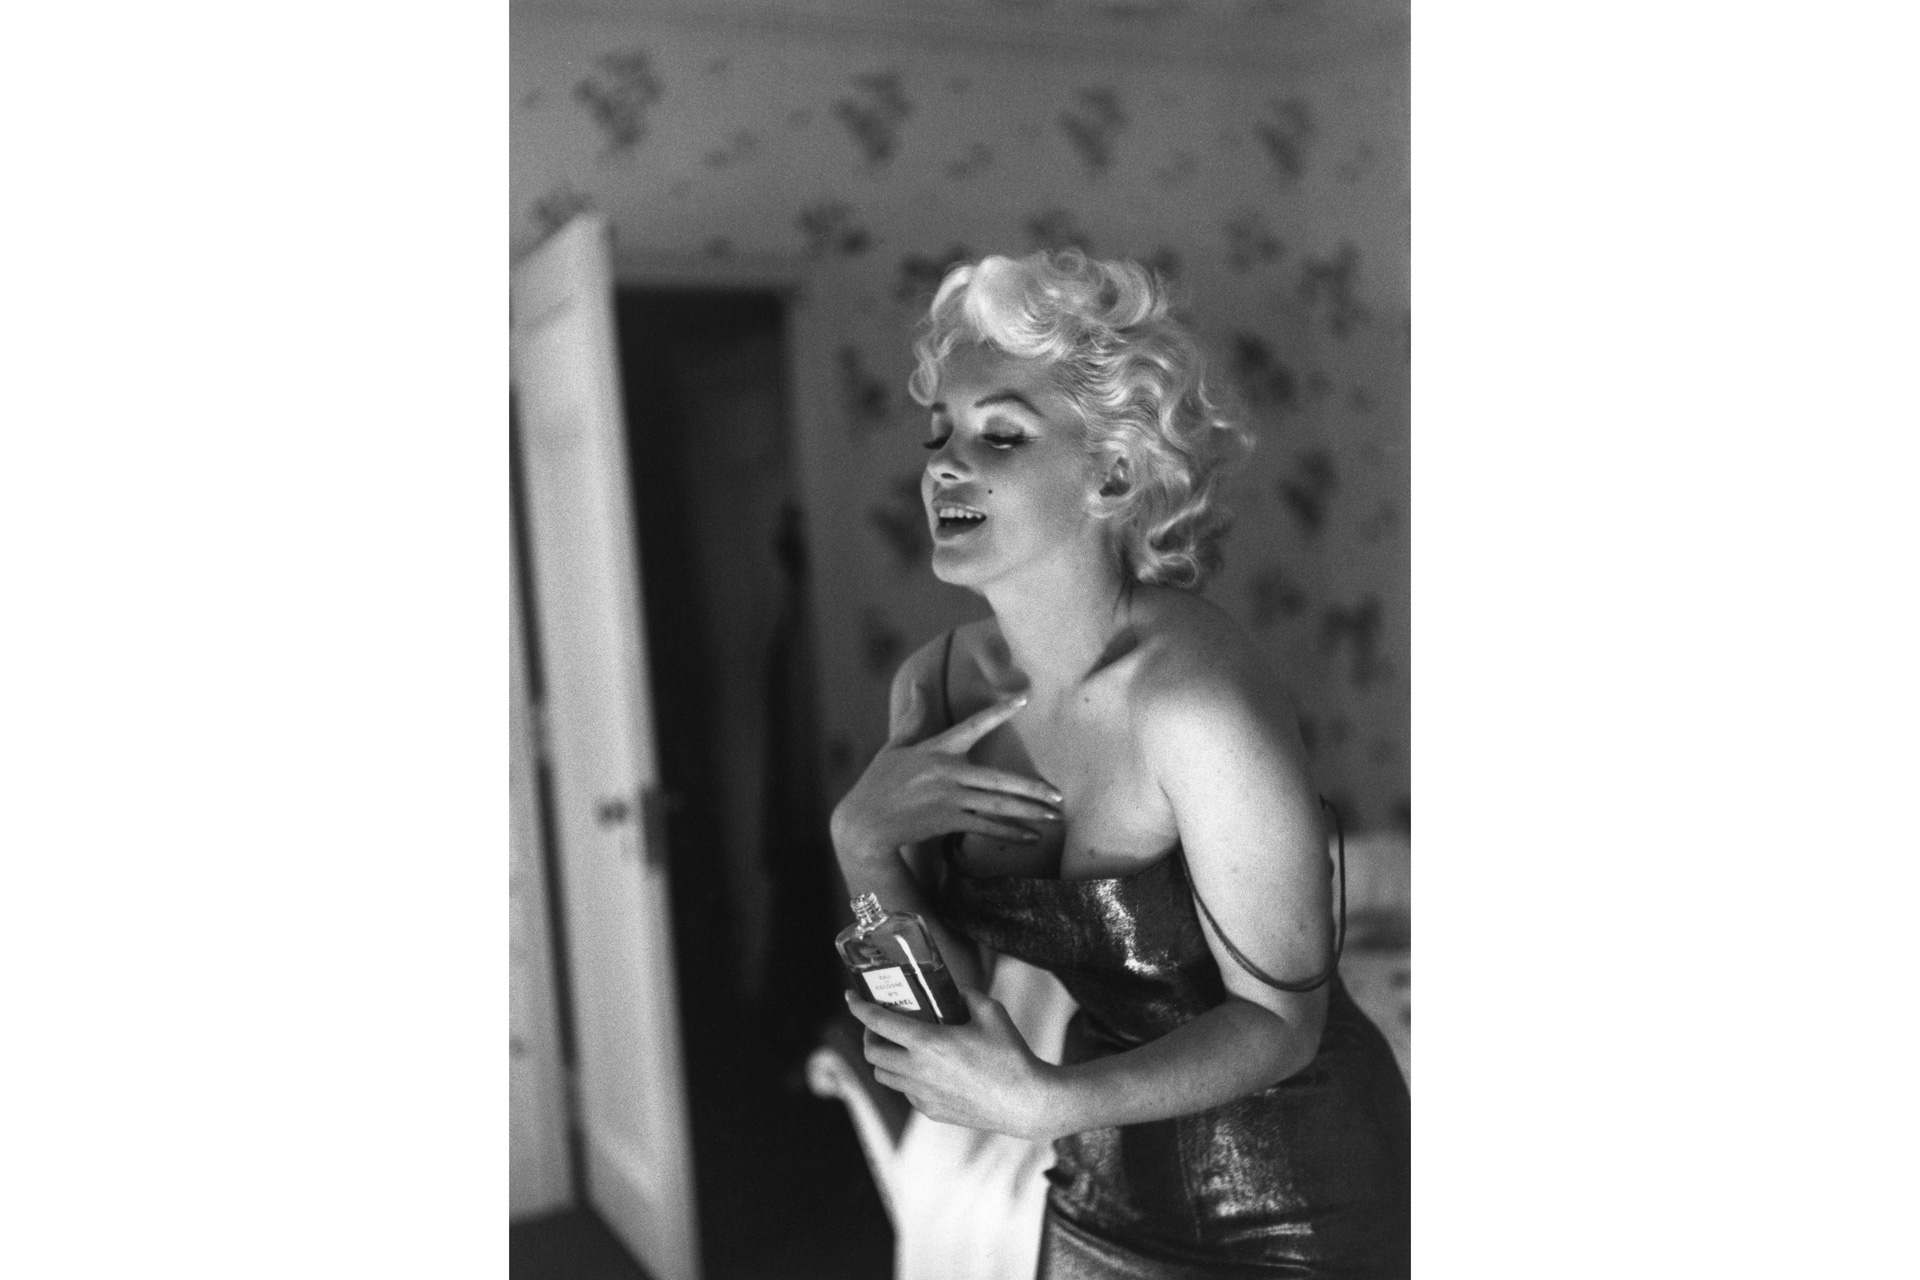 Marilyn Monroe applying Chanel No. 5